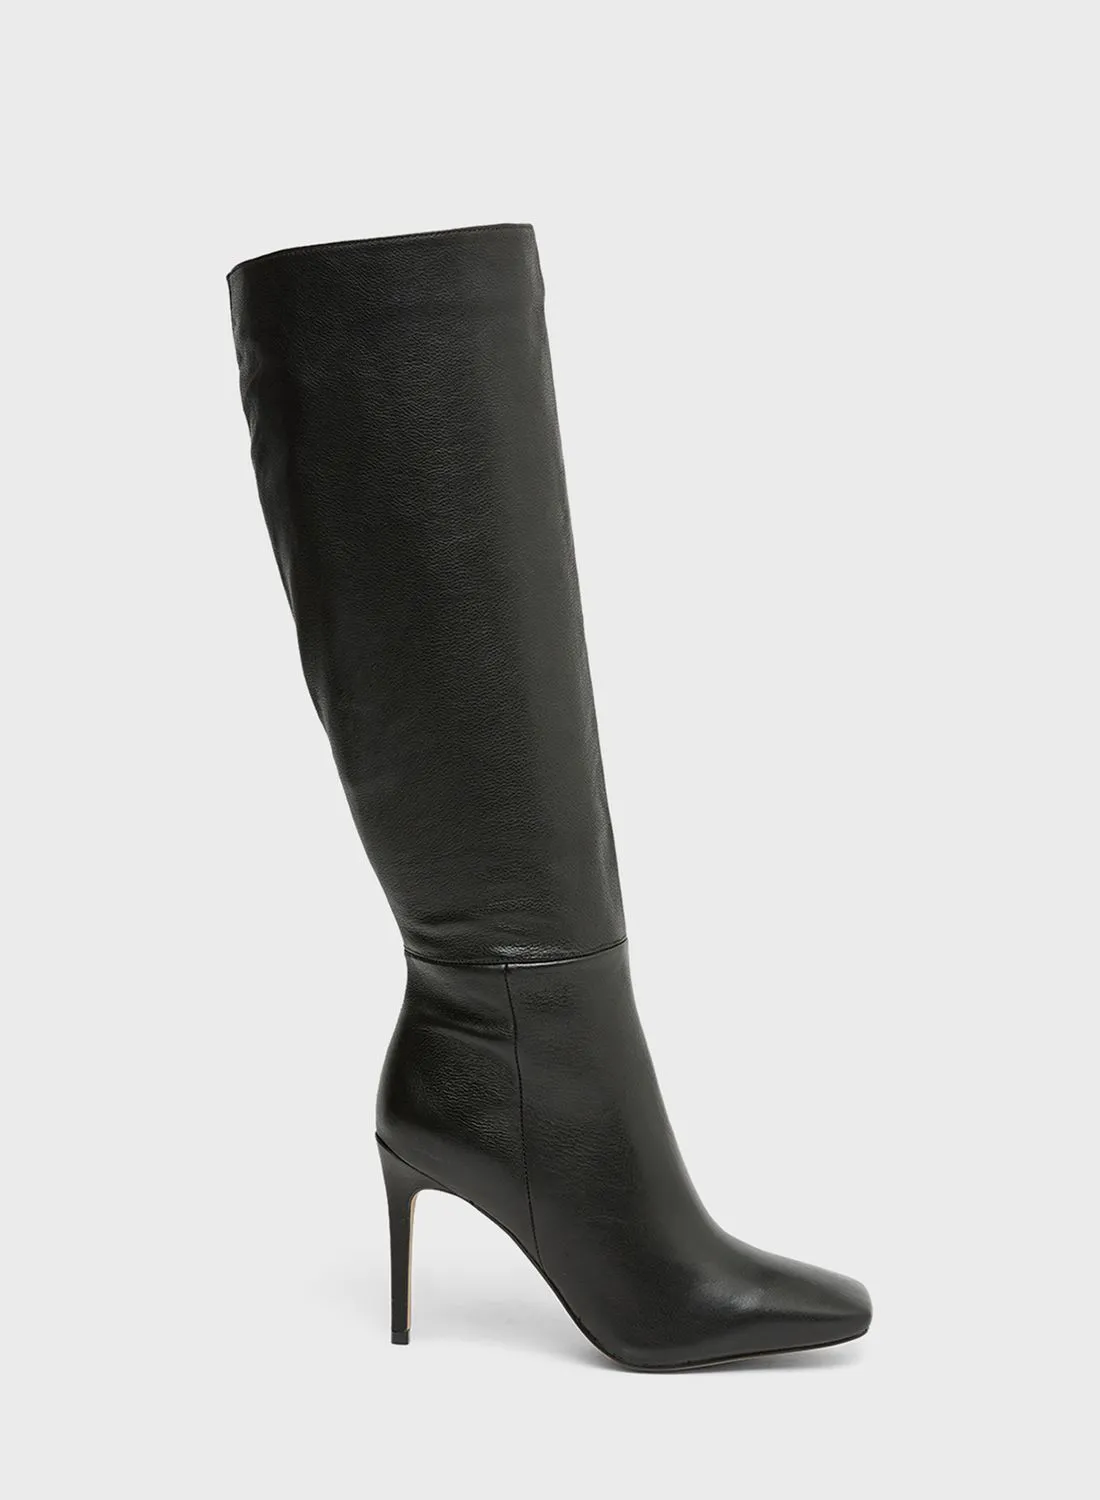 ALDO Oluria Knee-High Leather Boots